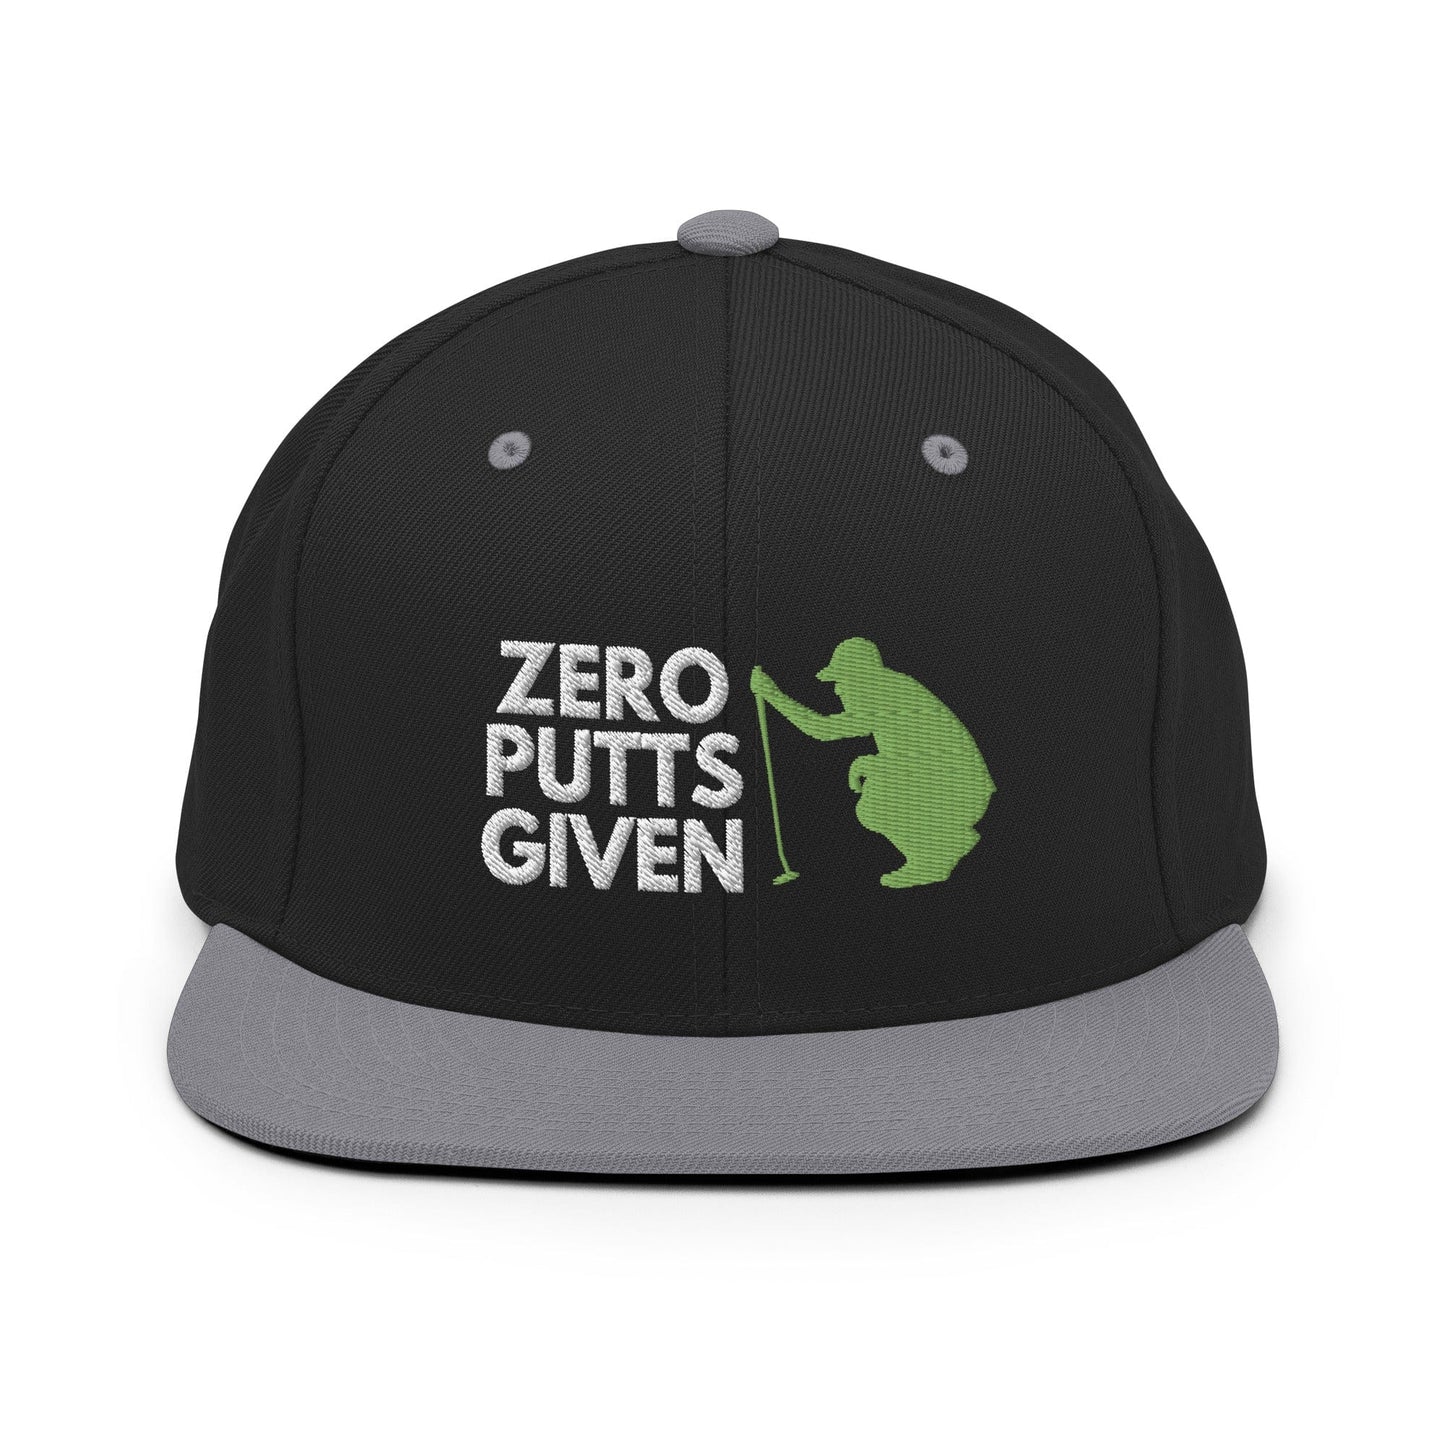 Funny Golfer Gifts  Snapback Hat Black/ Silver Zero Putts Given Hat Snapback Hat